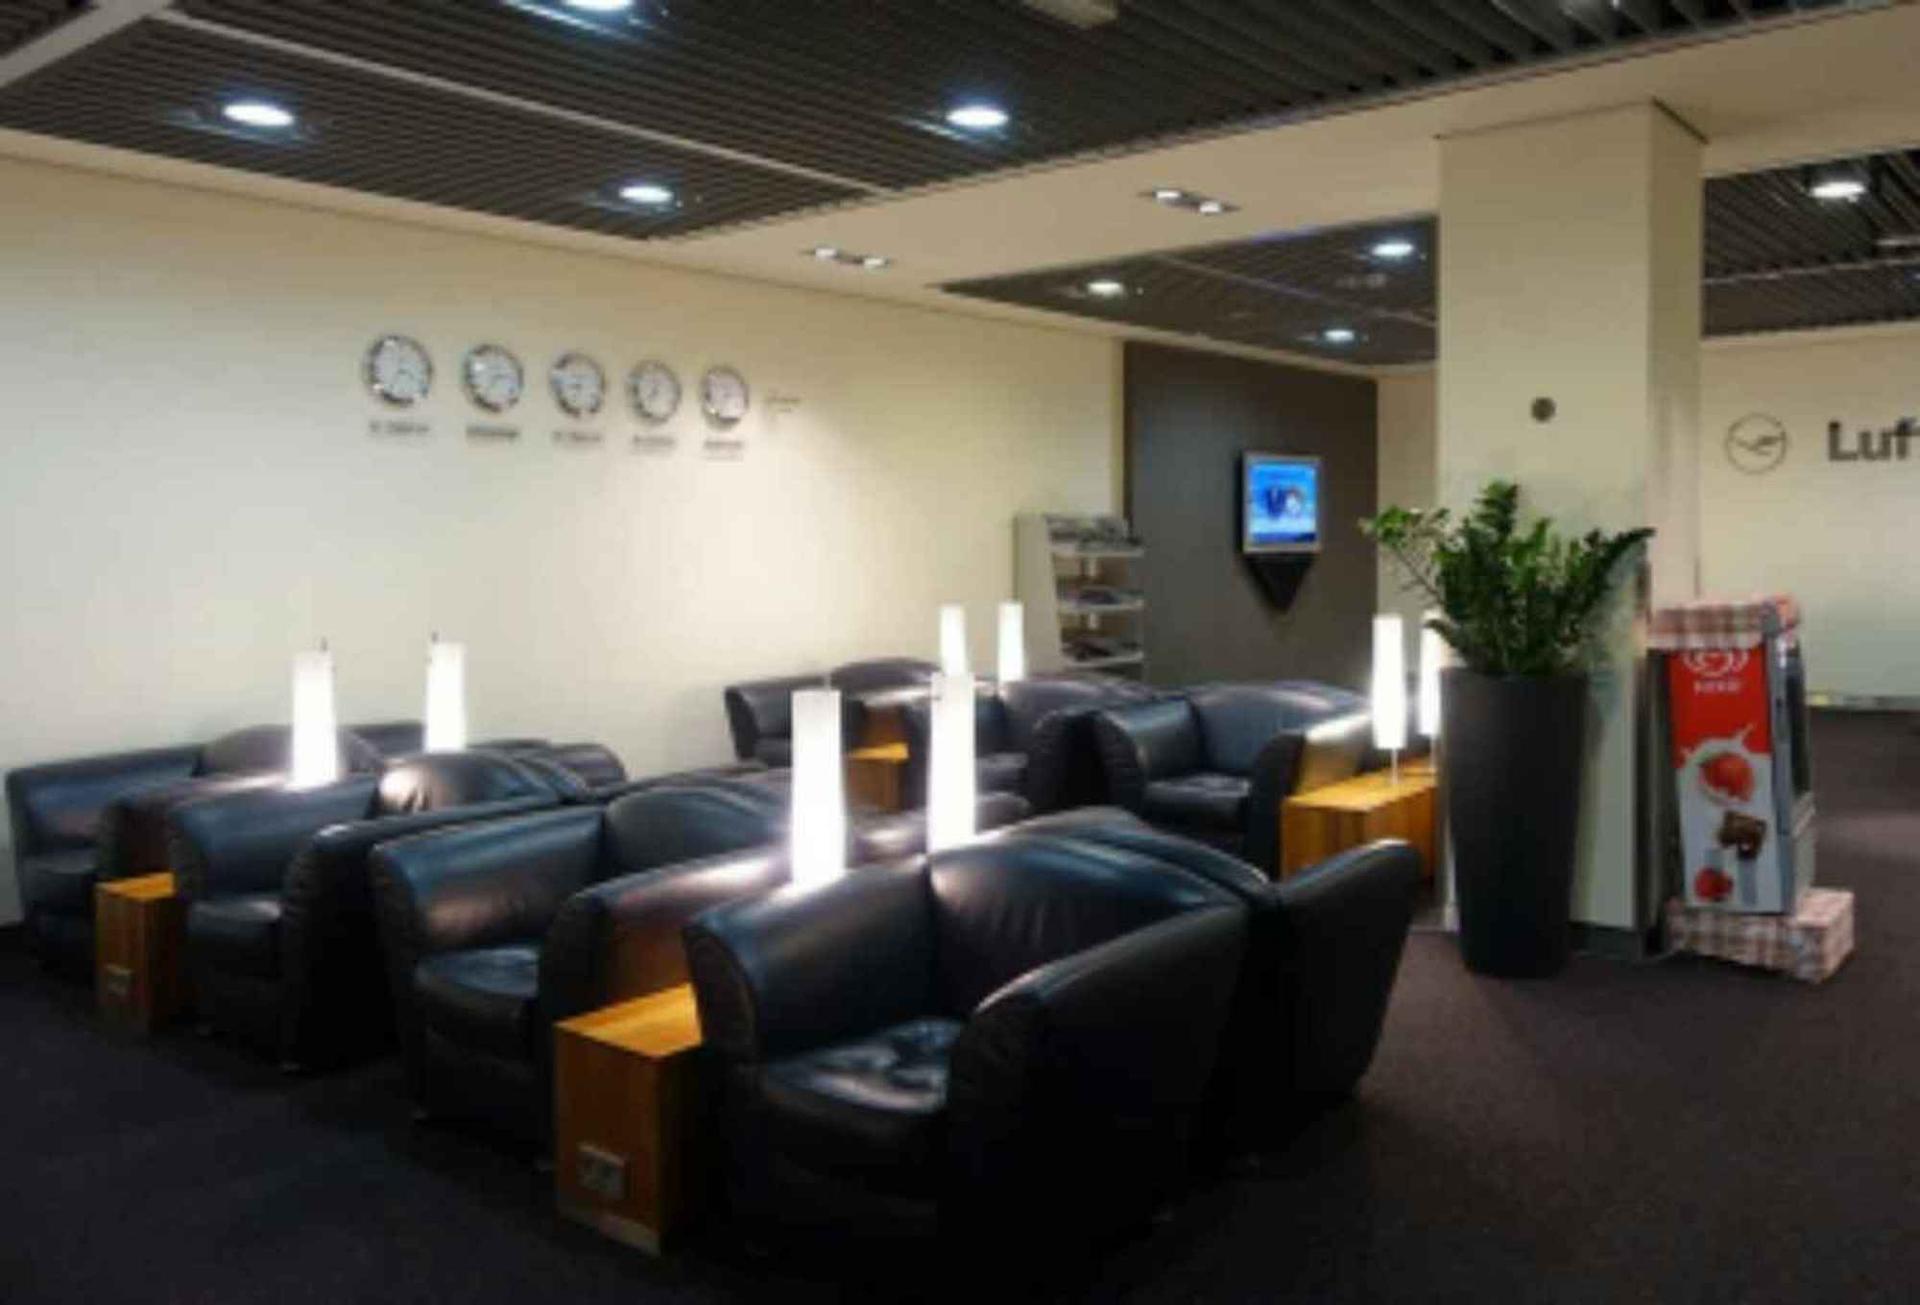 Lufthansa Senator Lounge image 2 of 7